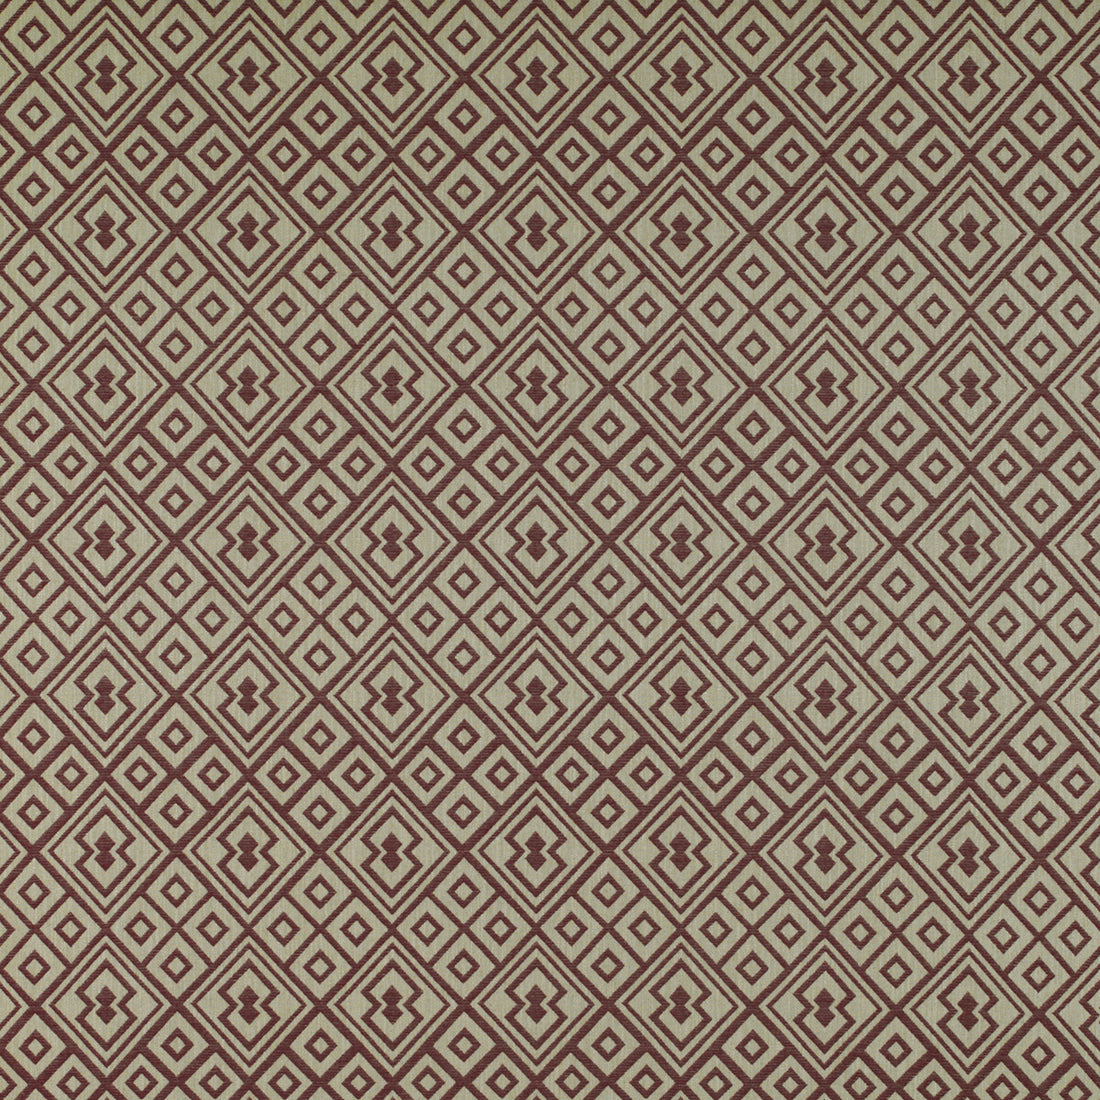 Bergamo fabric in burdeos color - pattern GDT5325.005.0 - by Gaston y Daniela in the Tierras collection